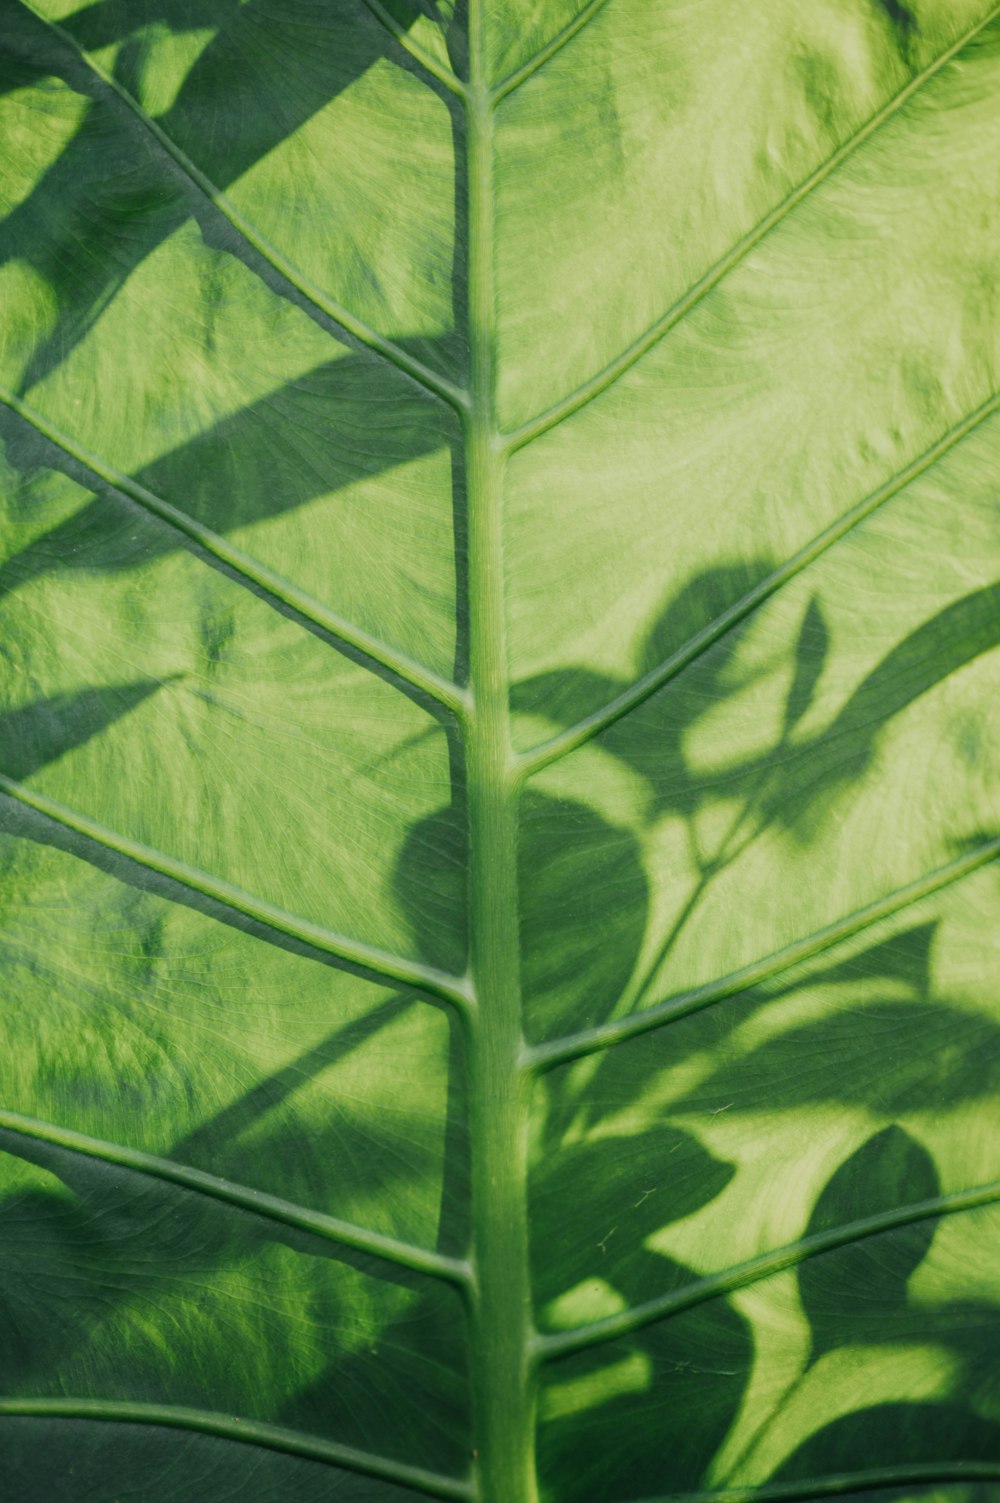 Colocasia esculenta leaf